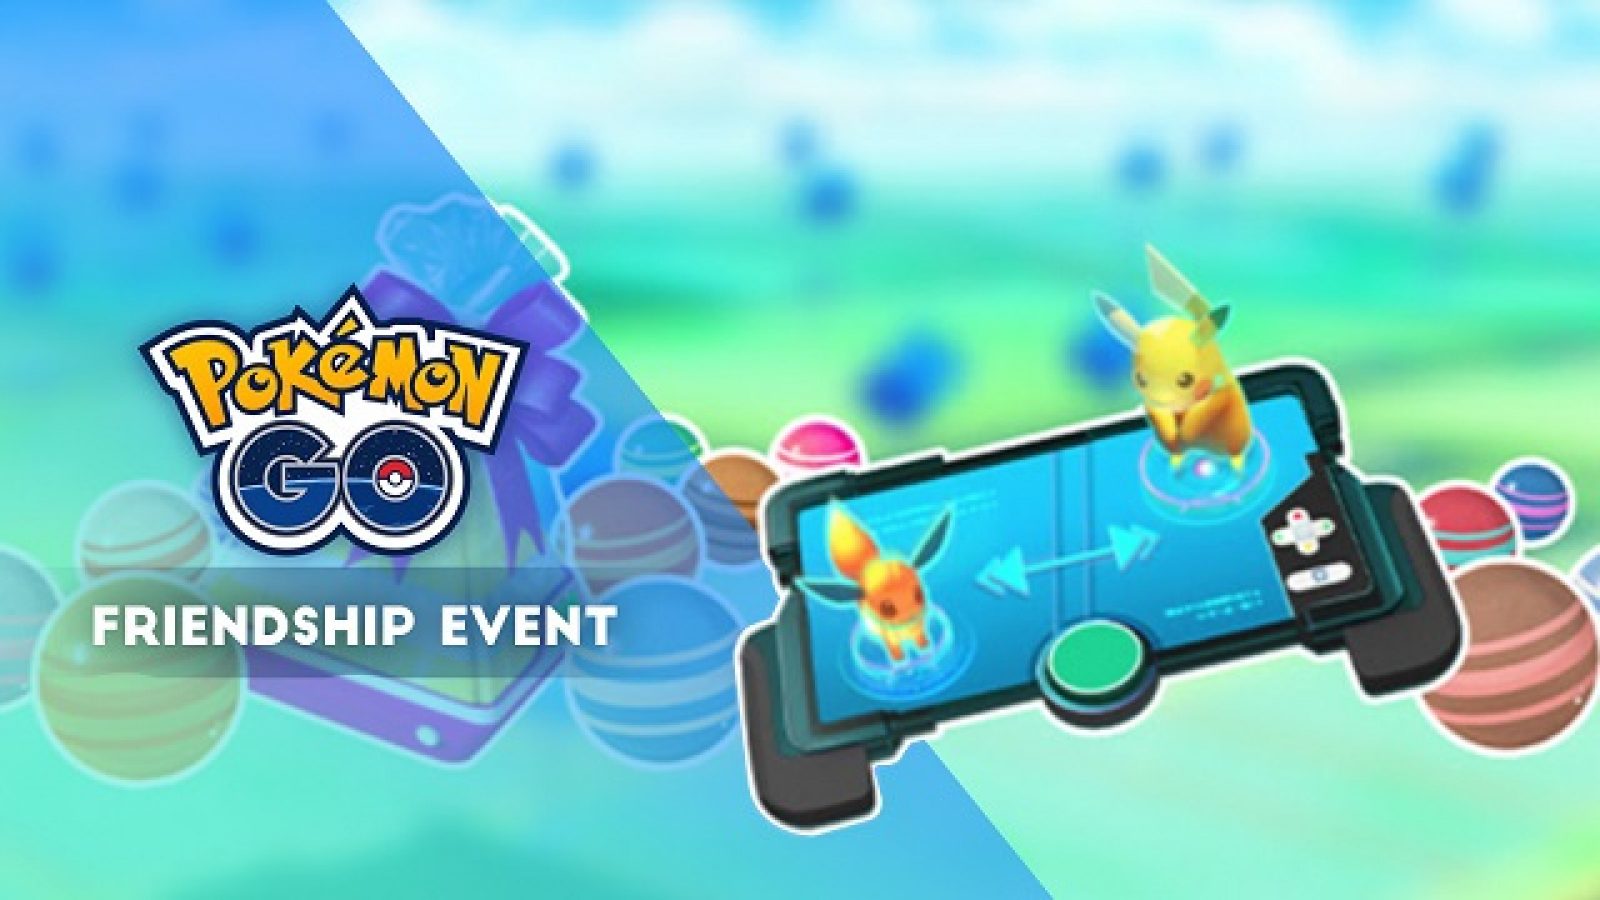 Pokémon Go Friendship Event